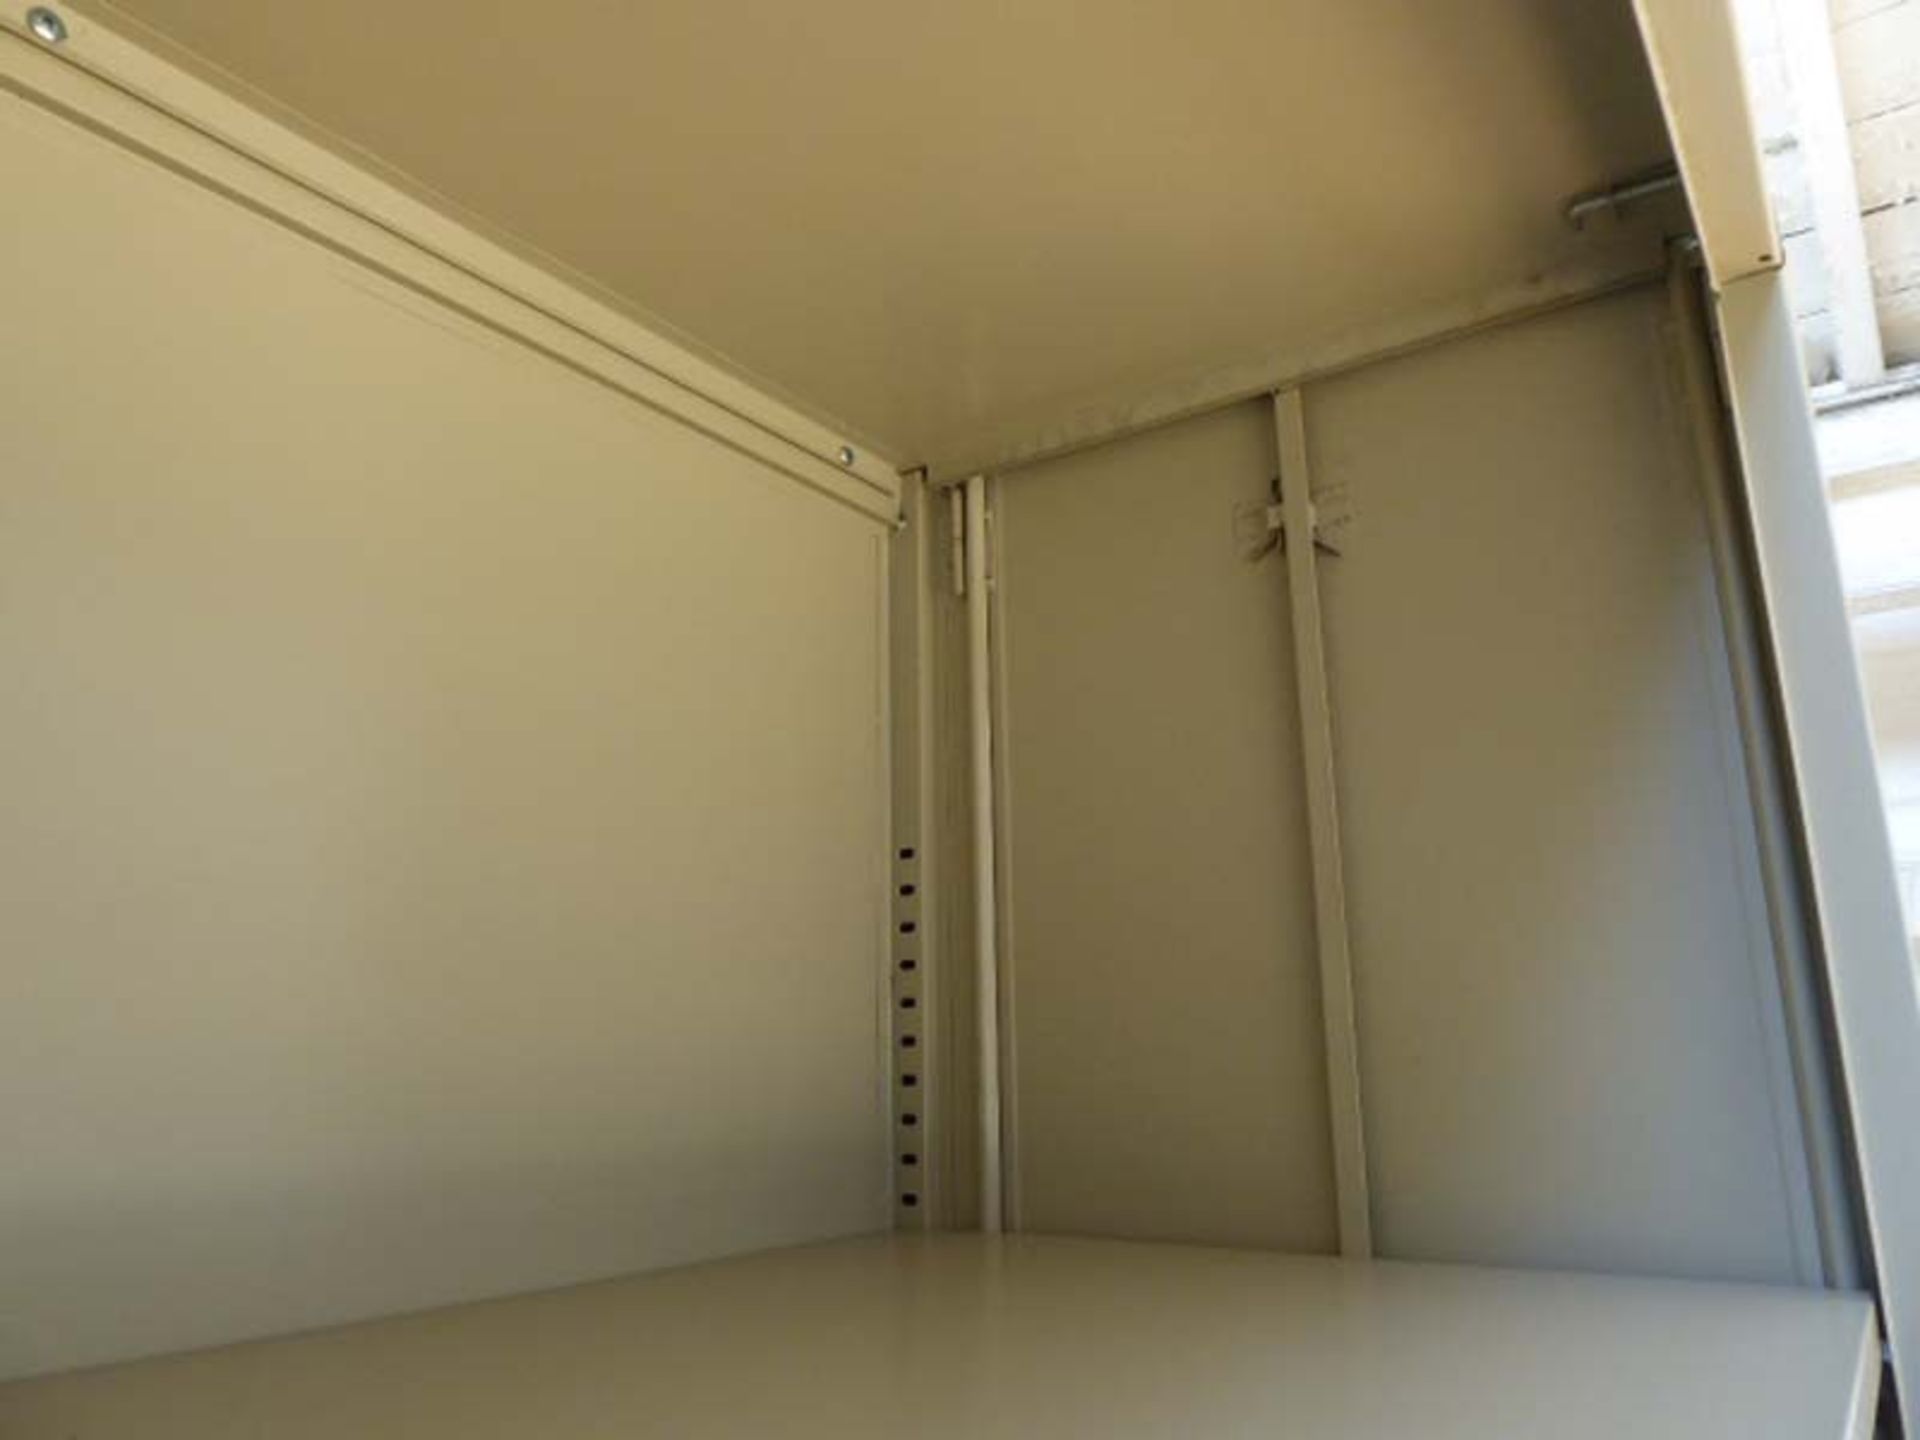 90cm wide by 200cm tall metal folding open bookshelf - Image 2 of 2